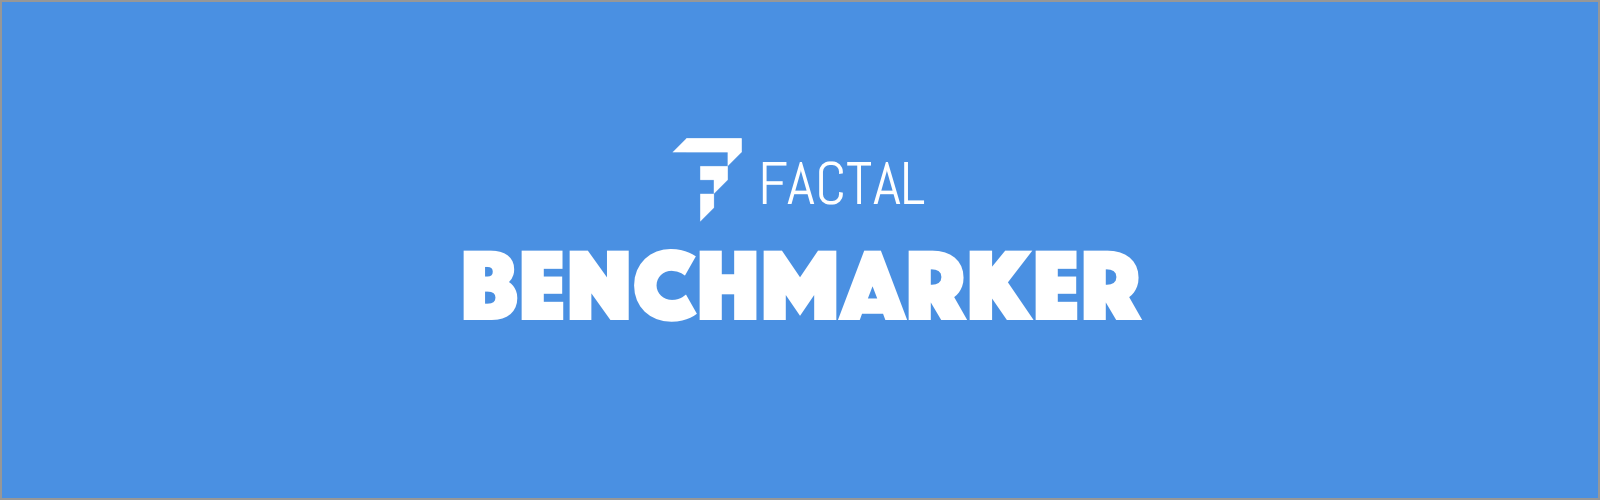 Factal Benchmarker logo on a blue field